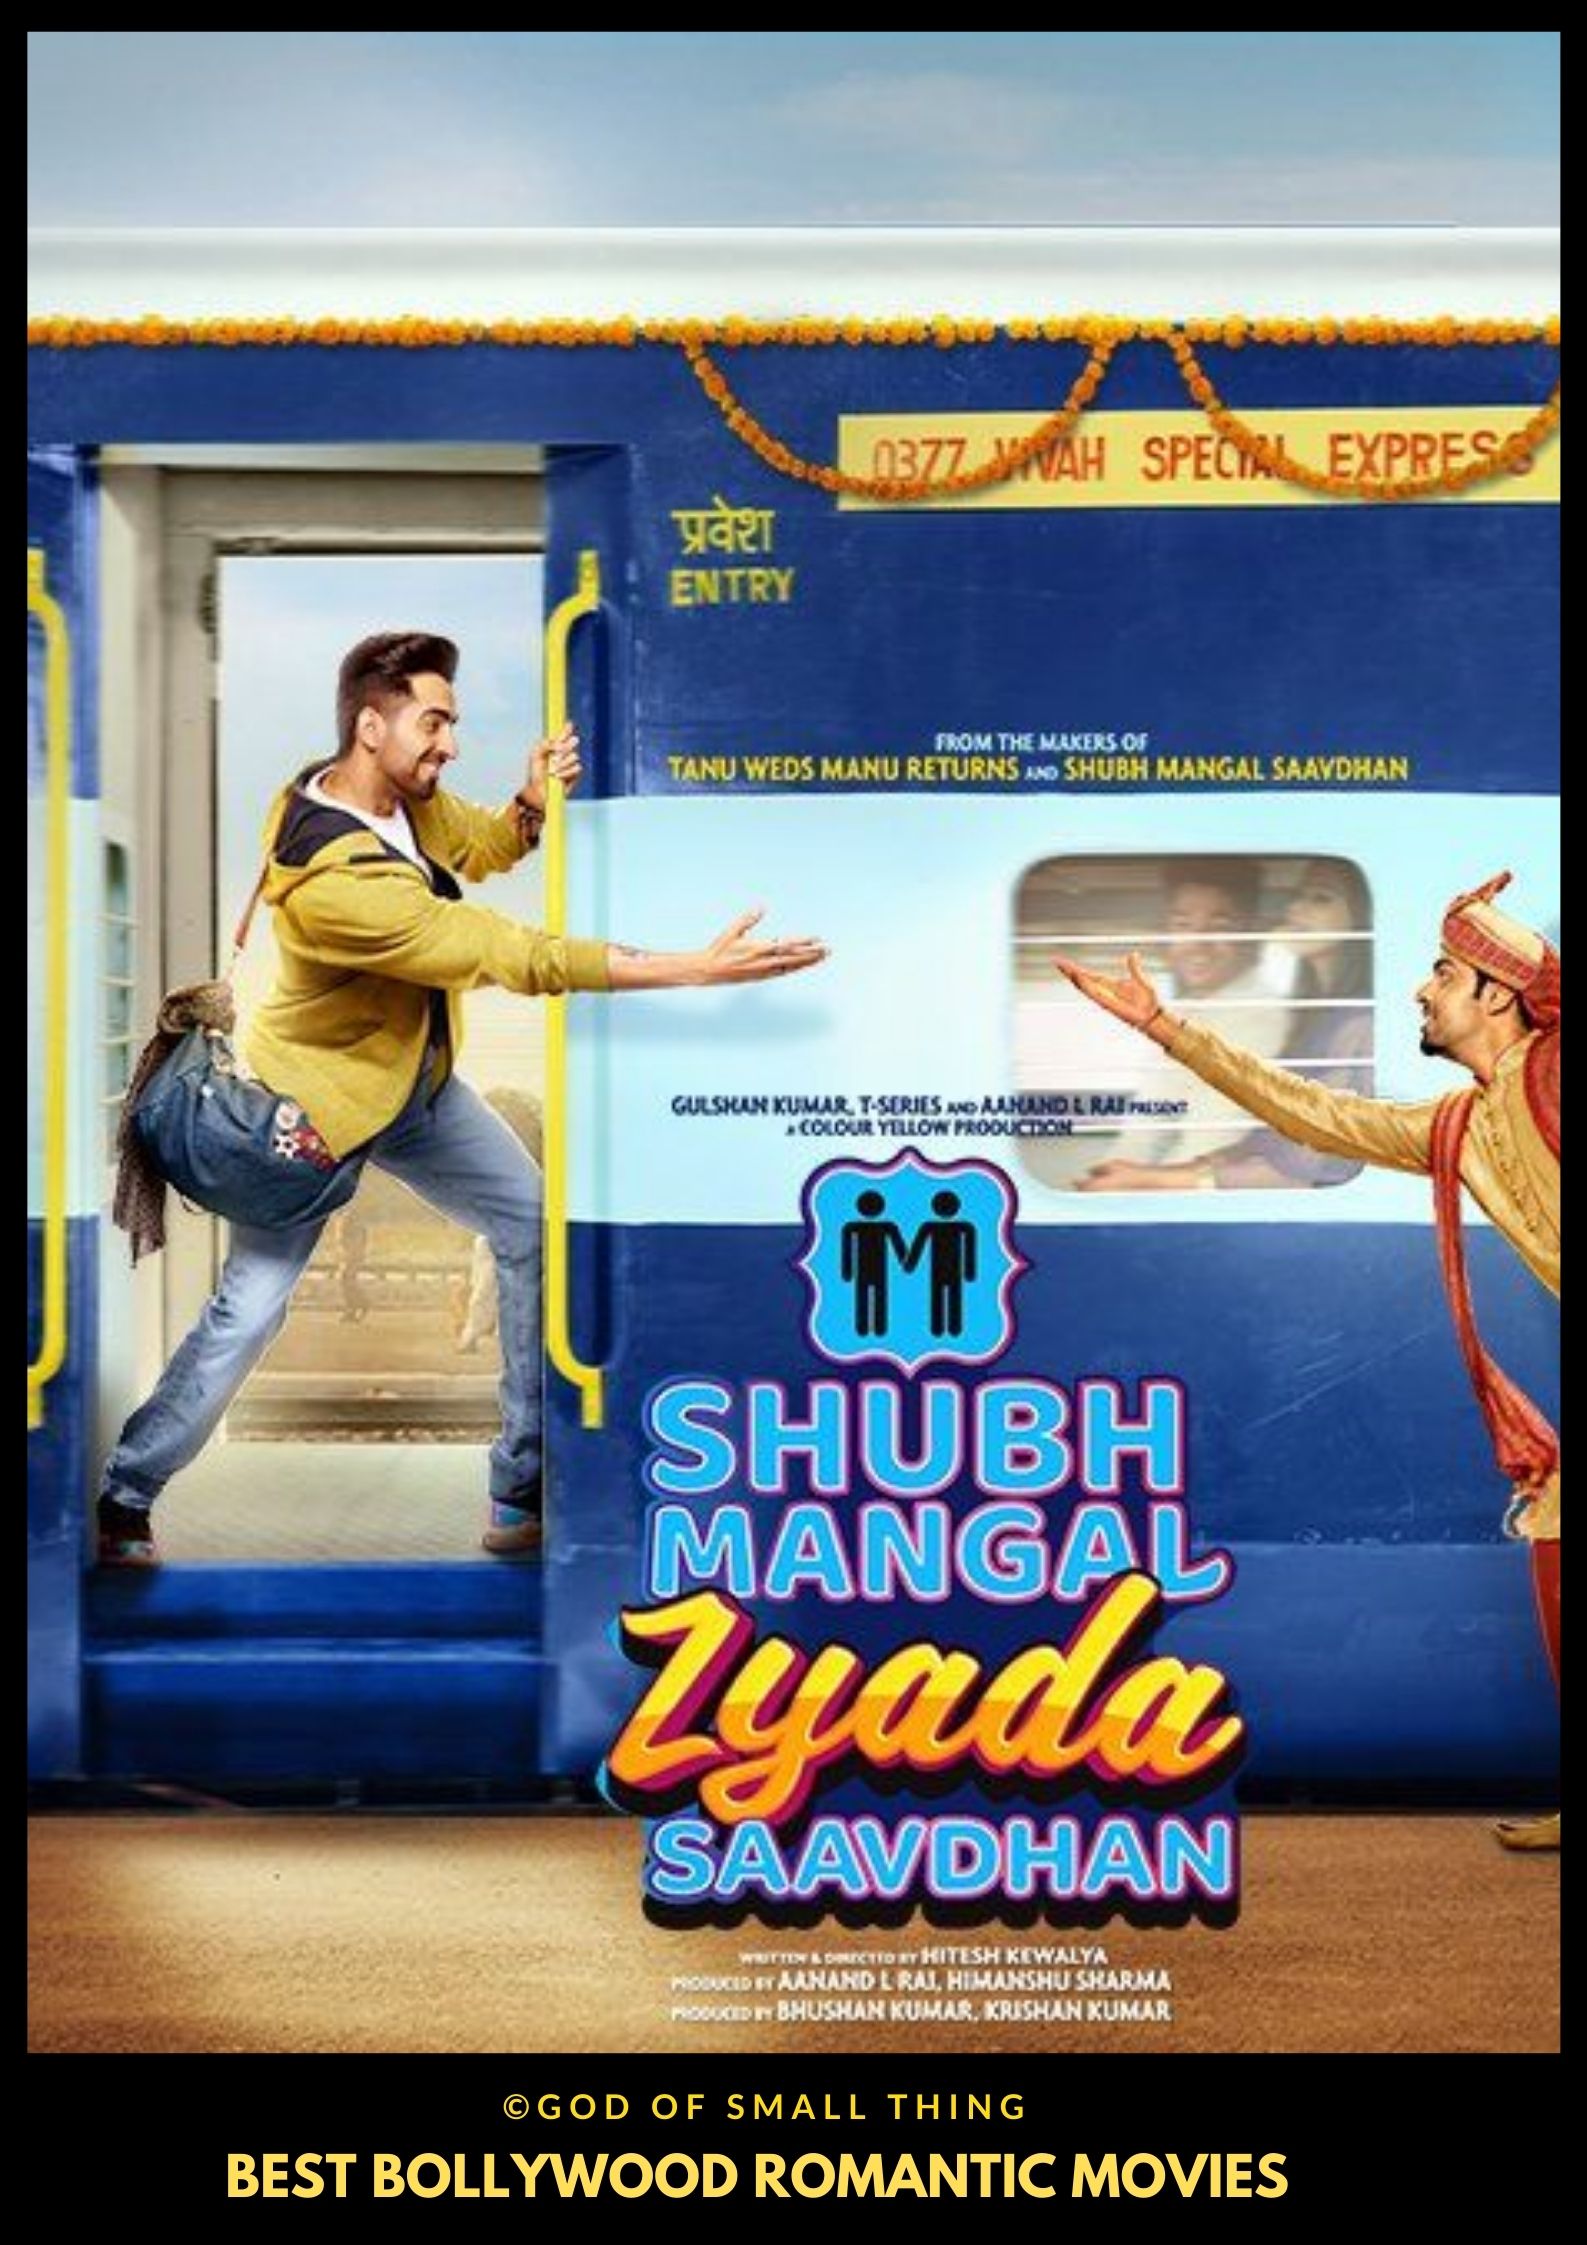 Shubh Mangal Zyada Savdhan movie online